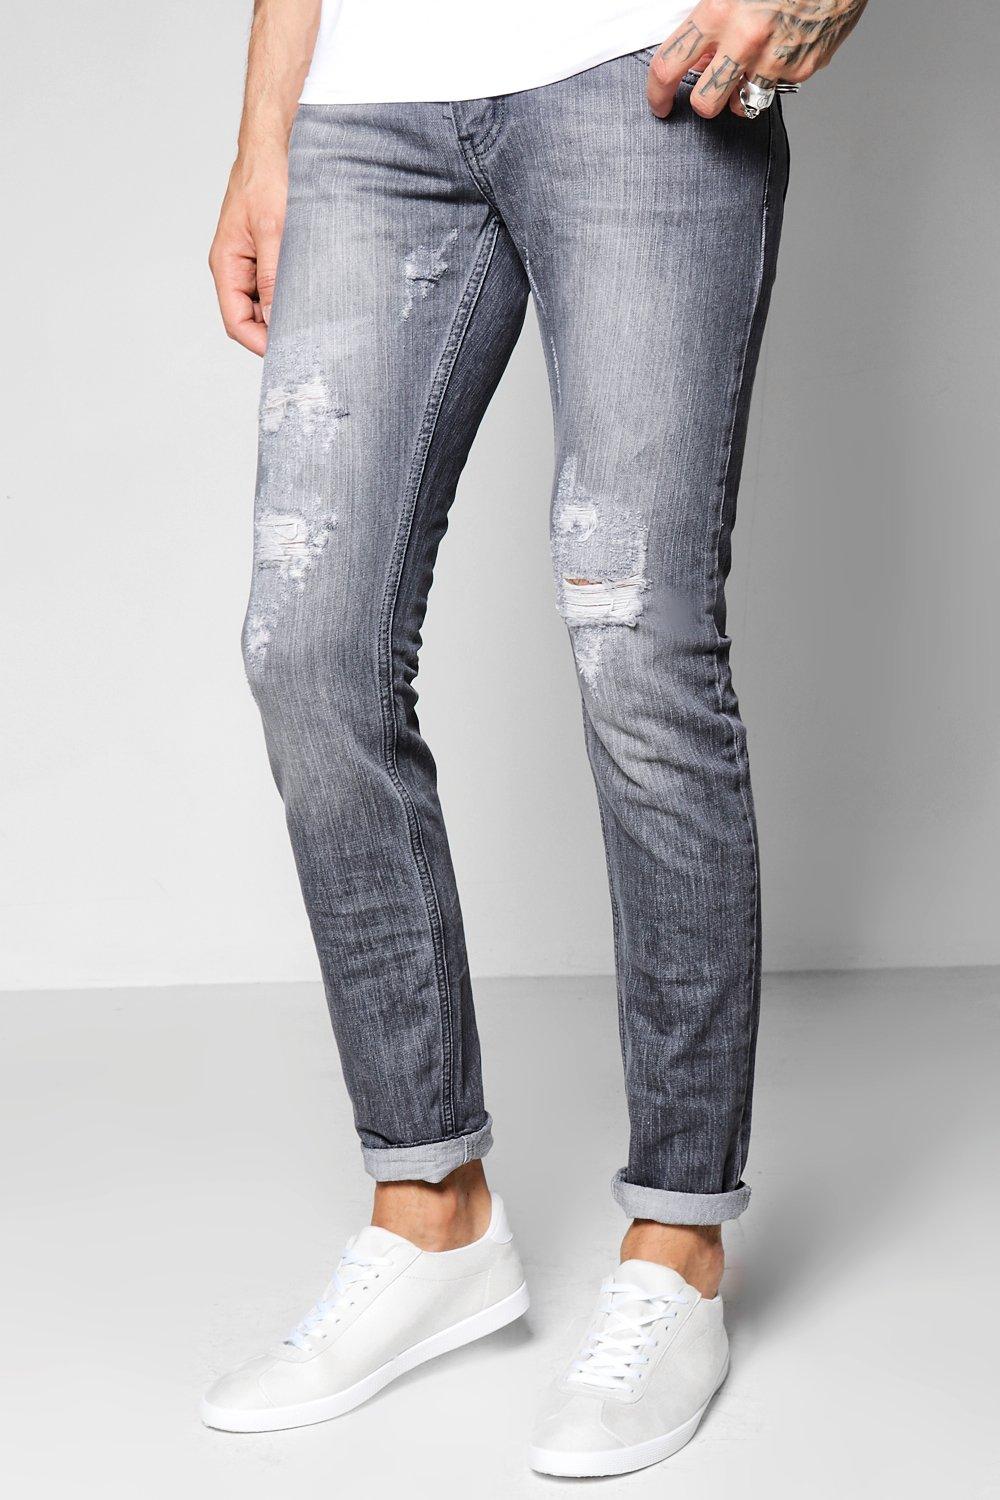 Grey Distressed Denim Jeans in Slim Fit 